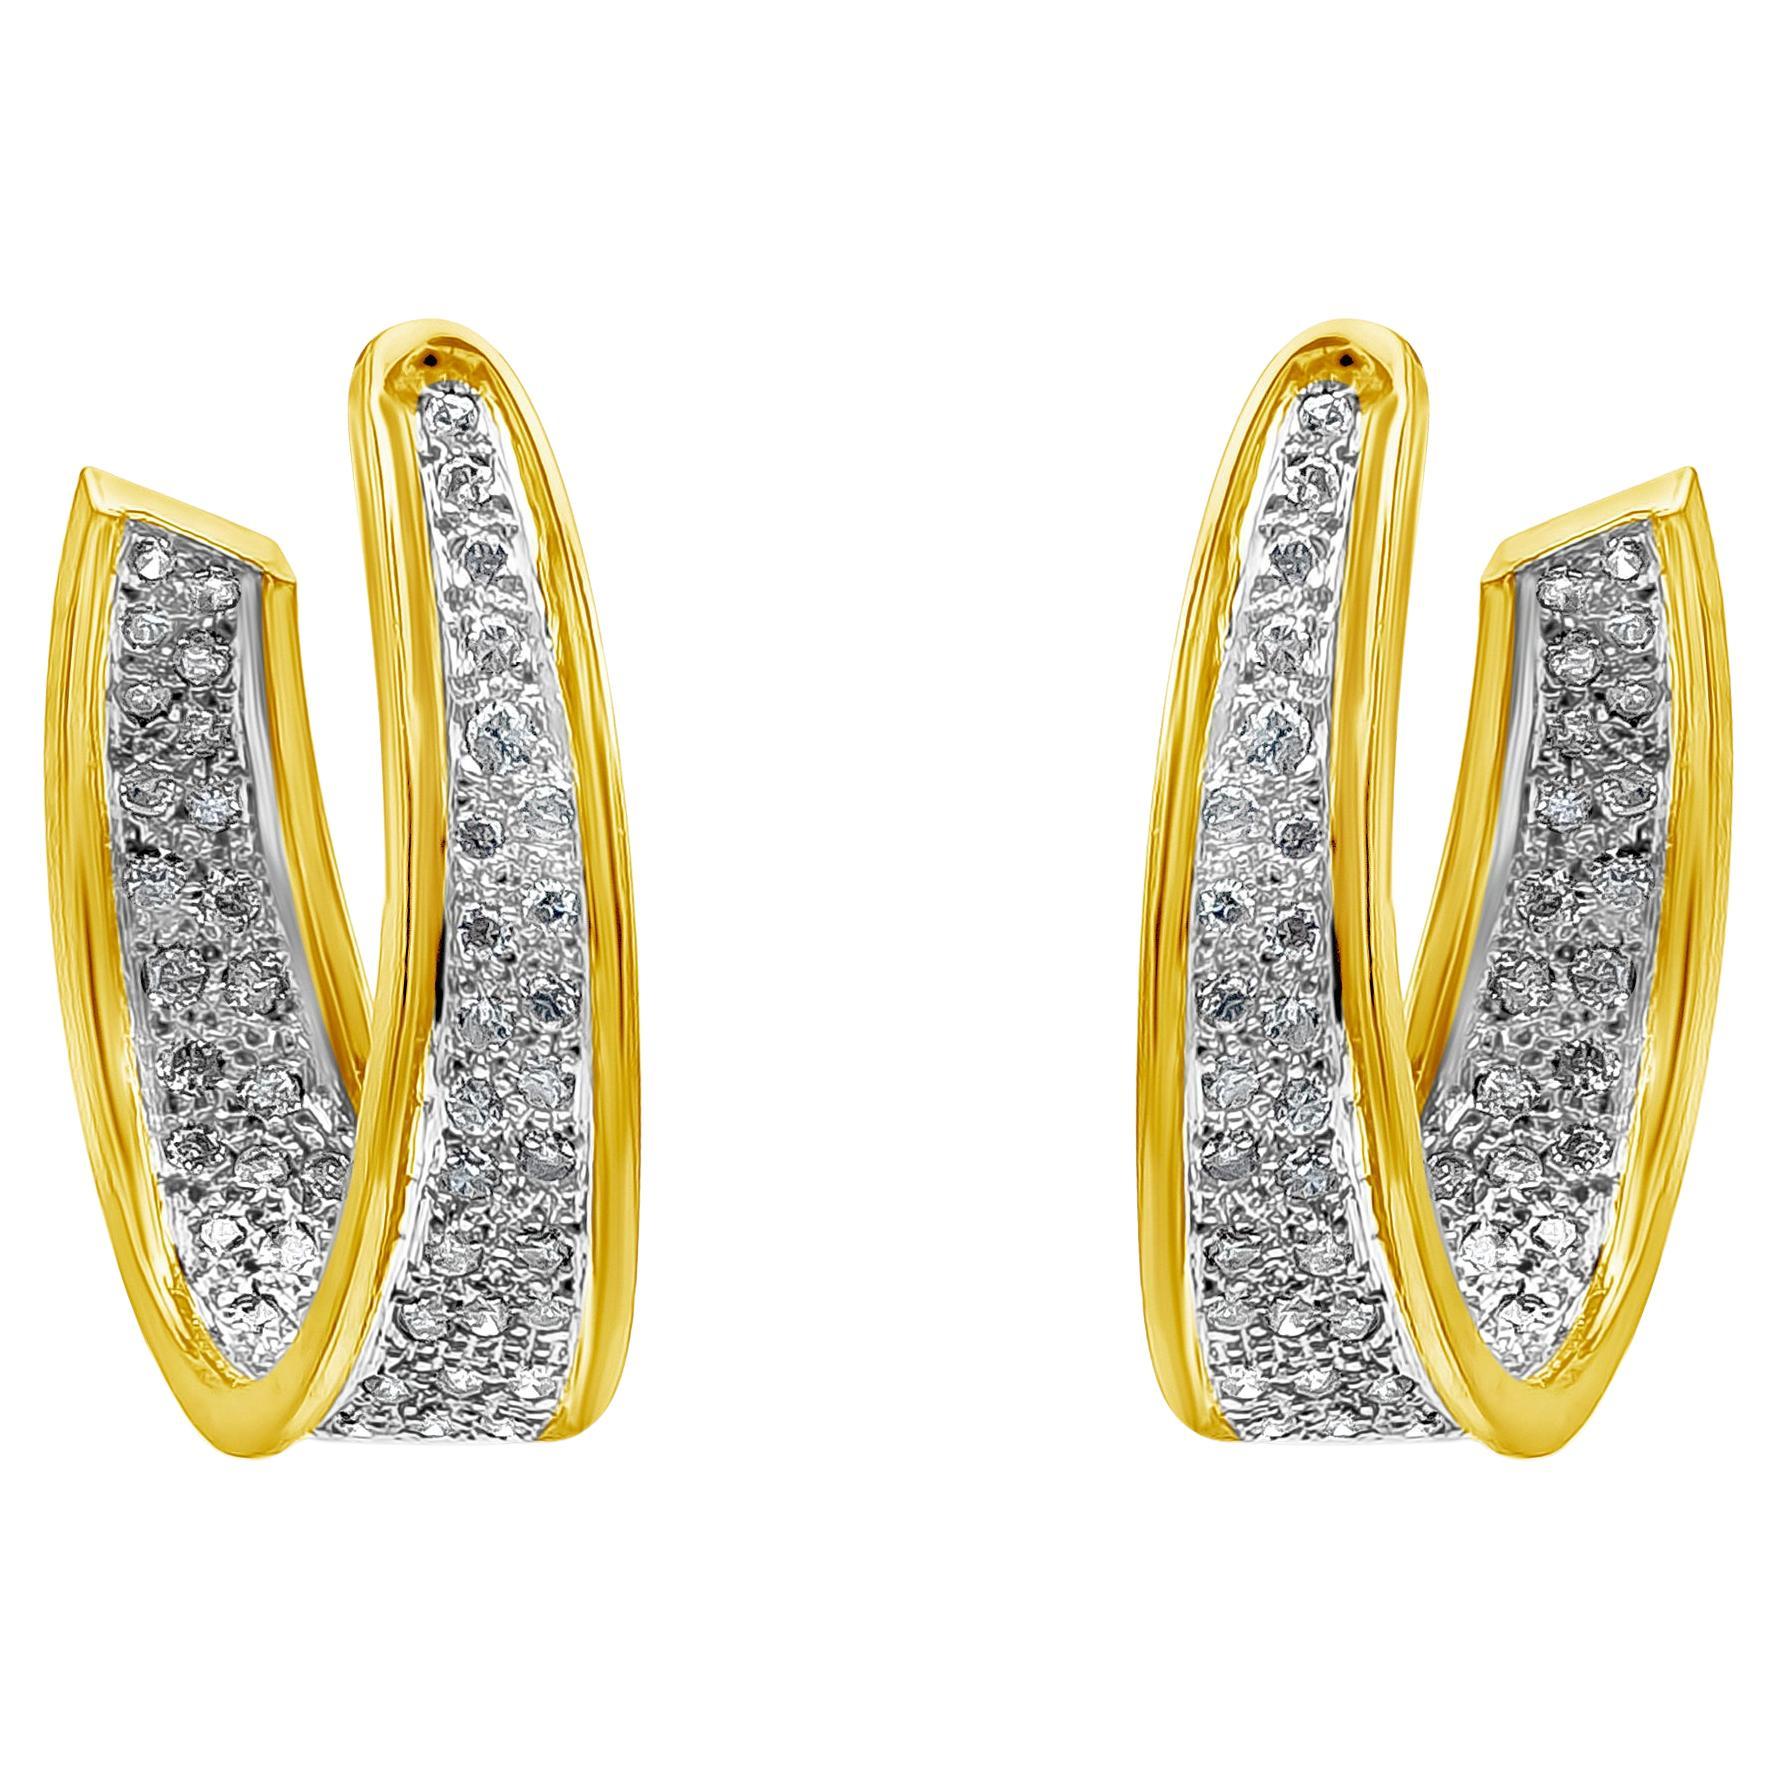 Runde Diamant-Ohrringe mit geschwungenen Creolen, insgesamt 2,20 Karat